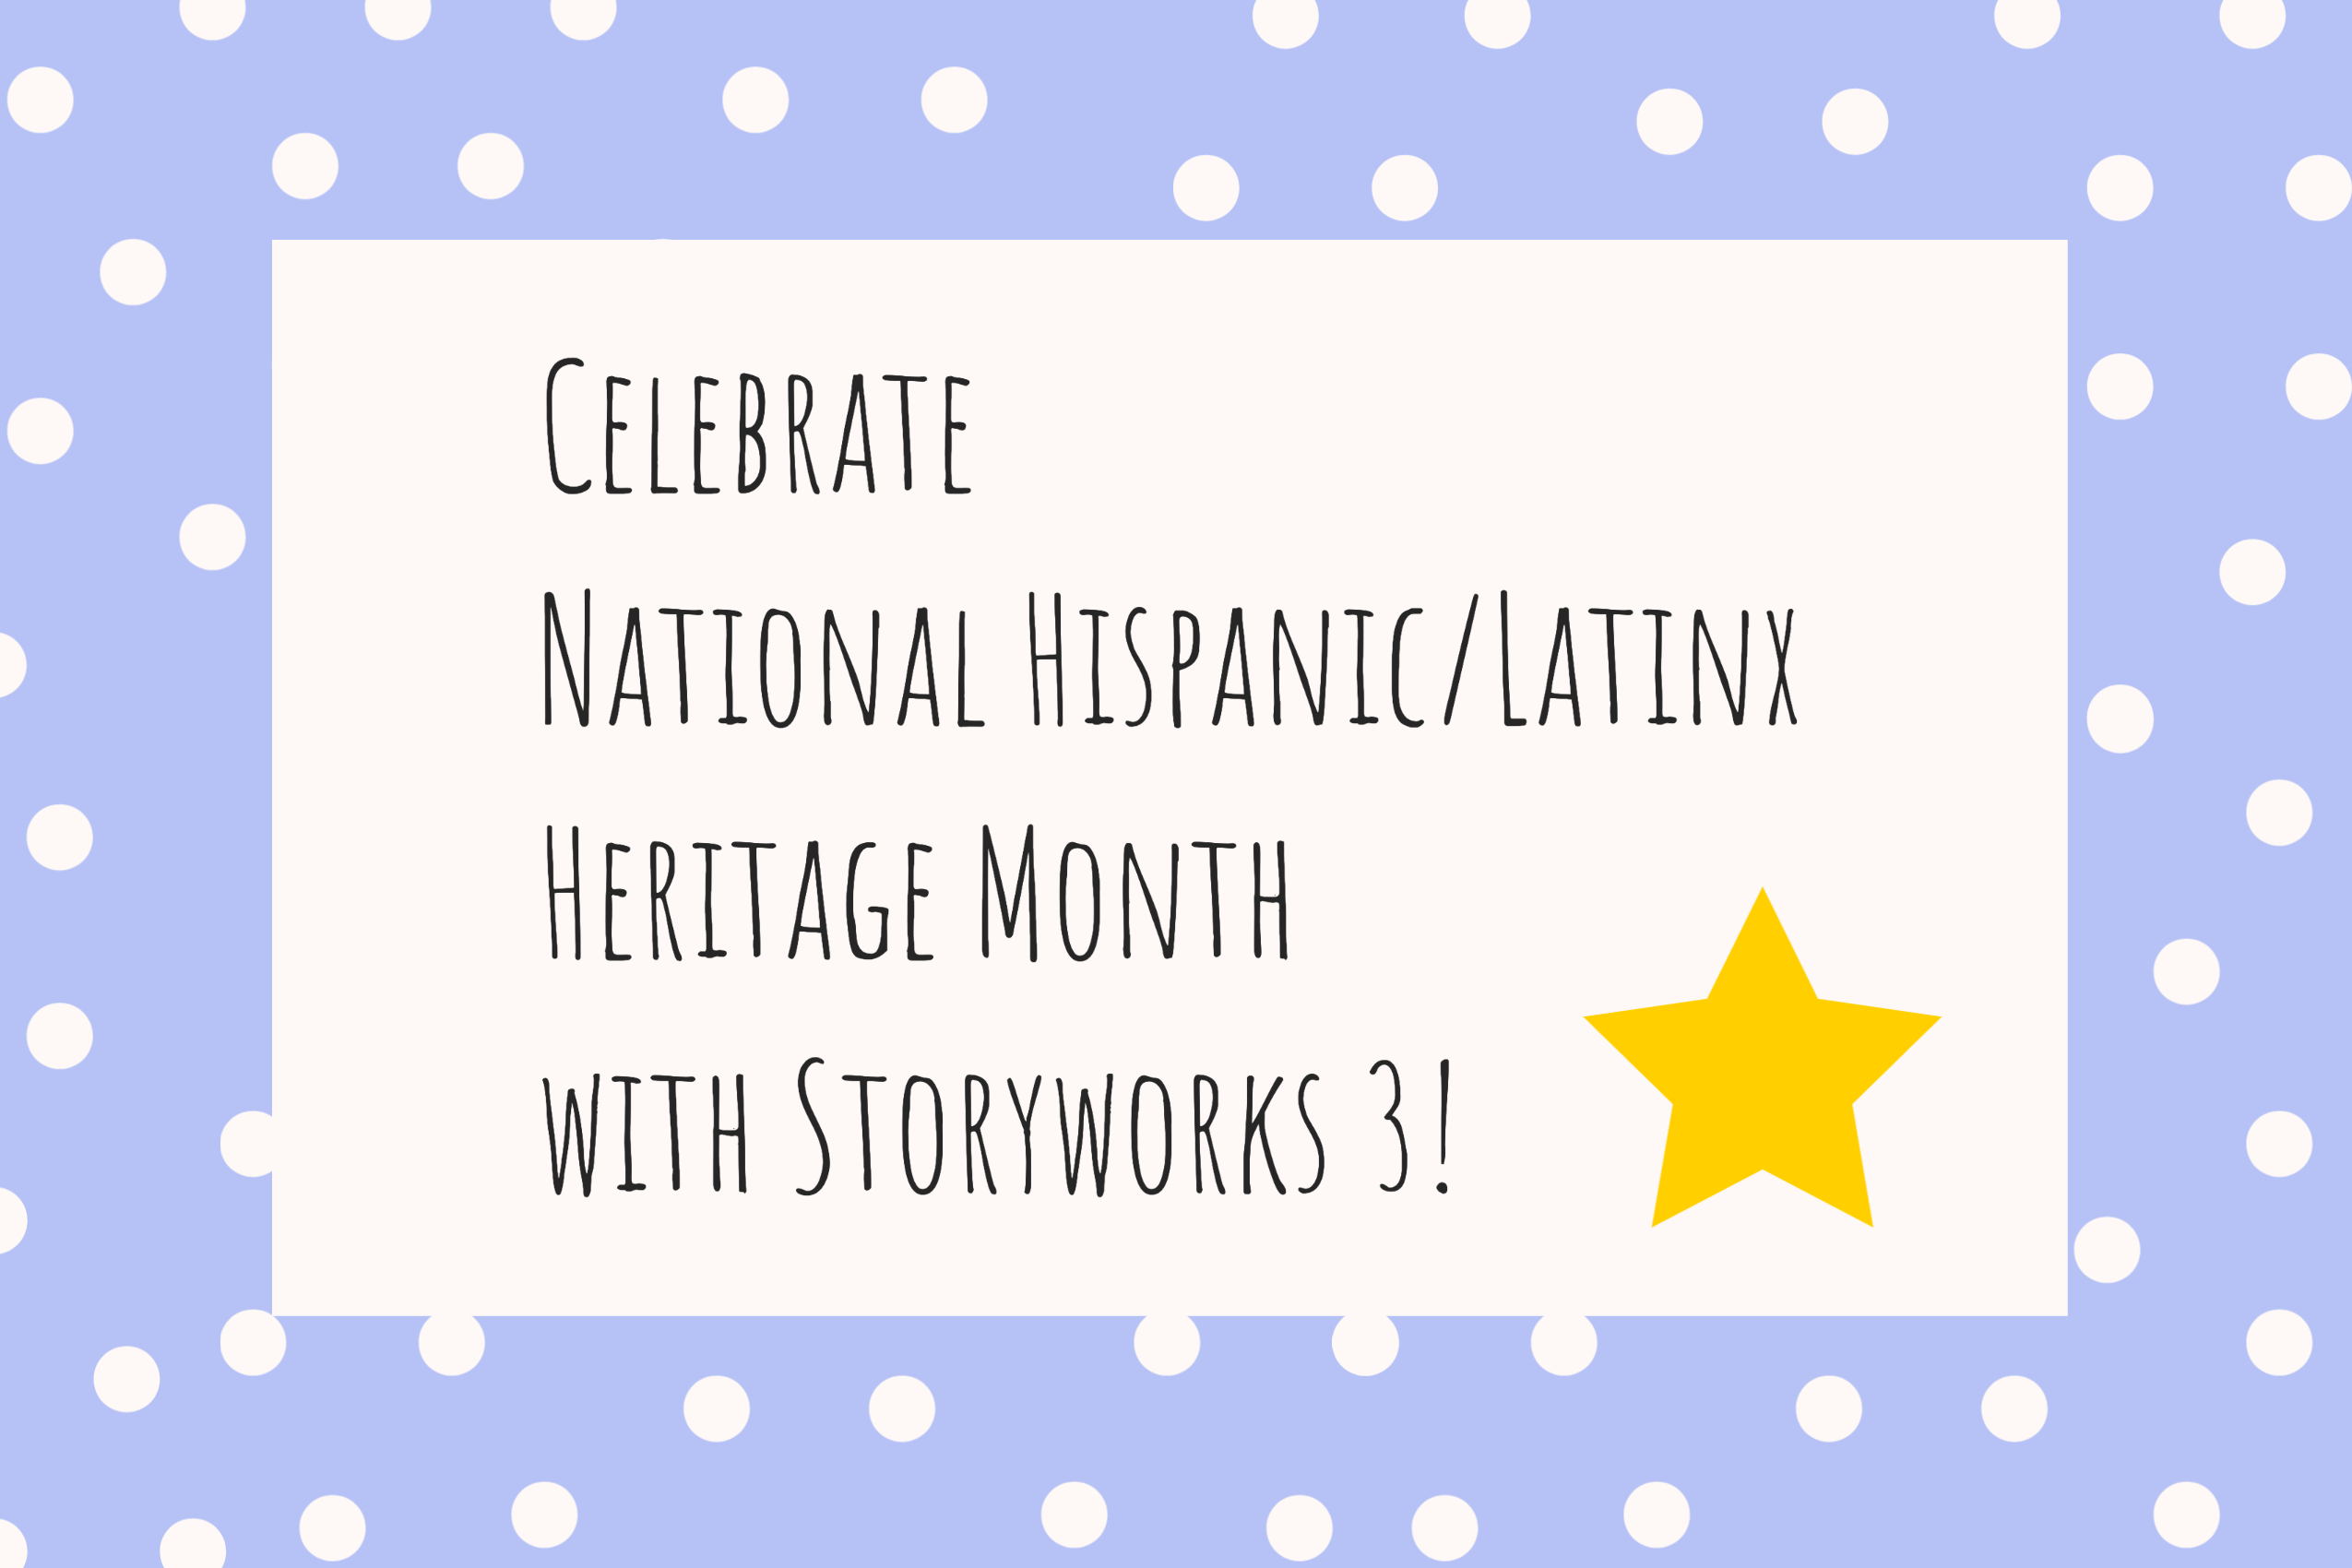 celebrate national hispanic/latinx heritage month with storyworks 3